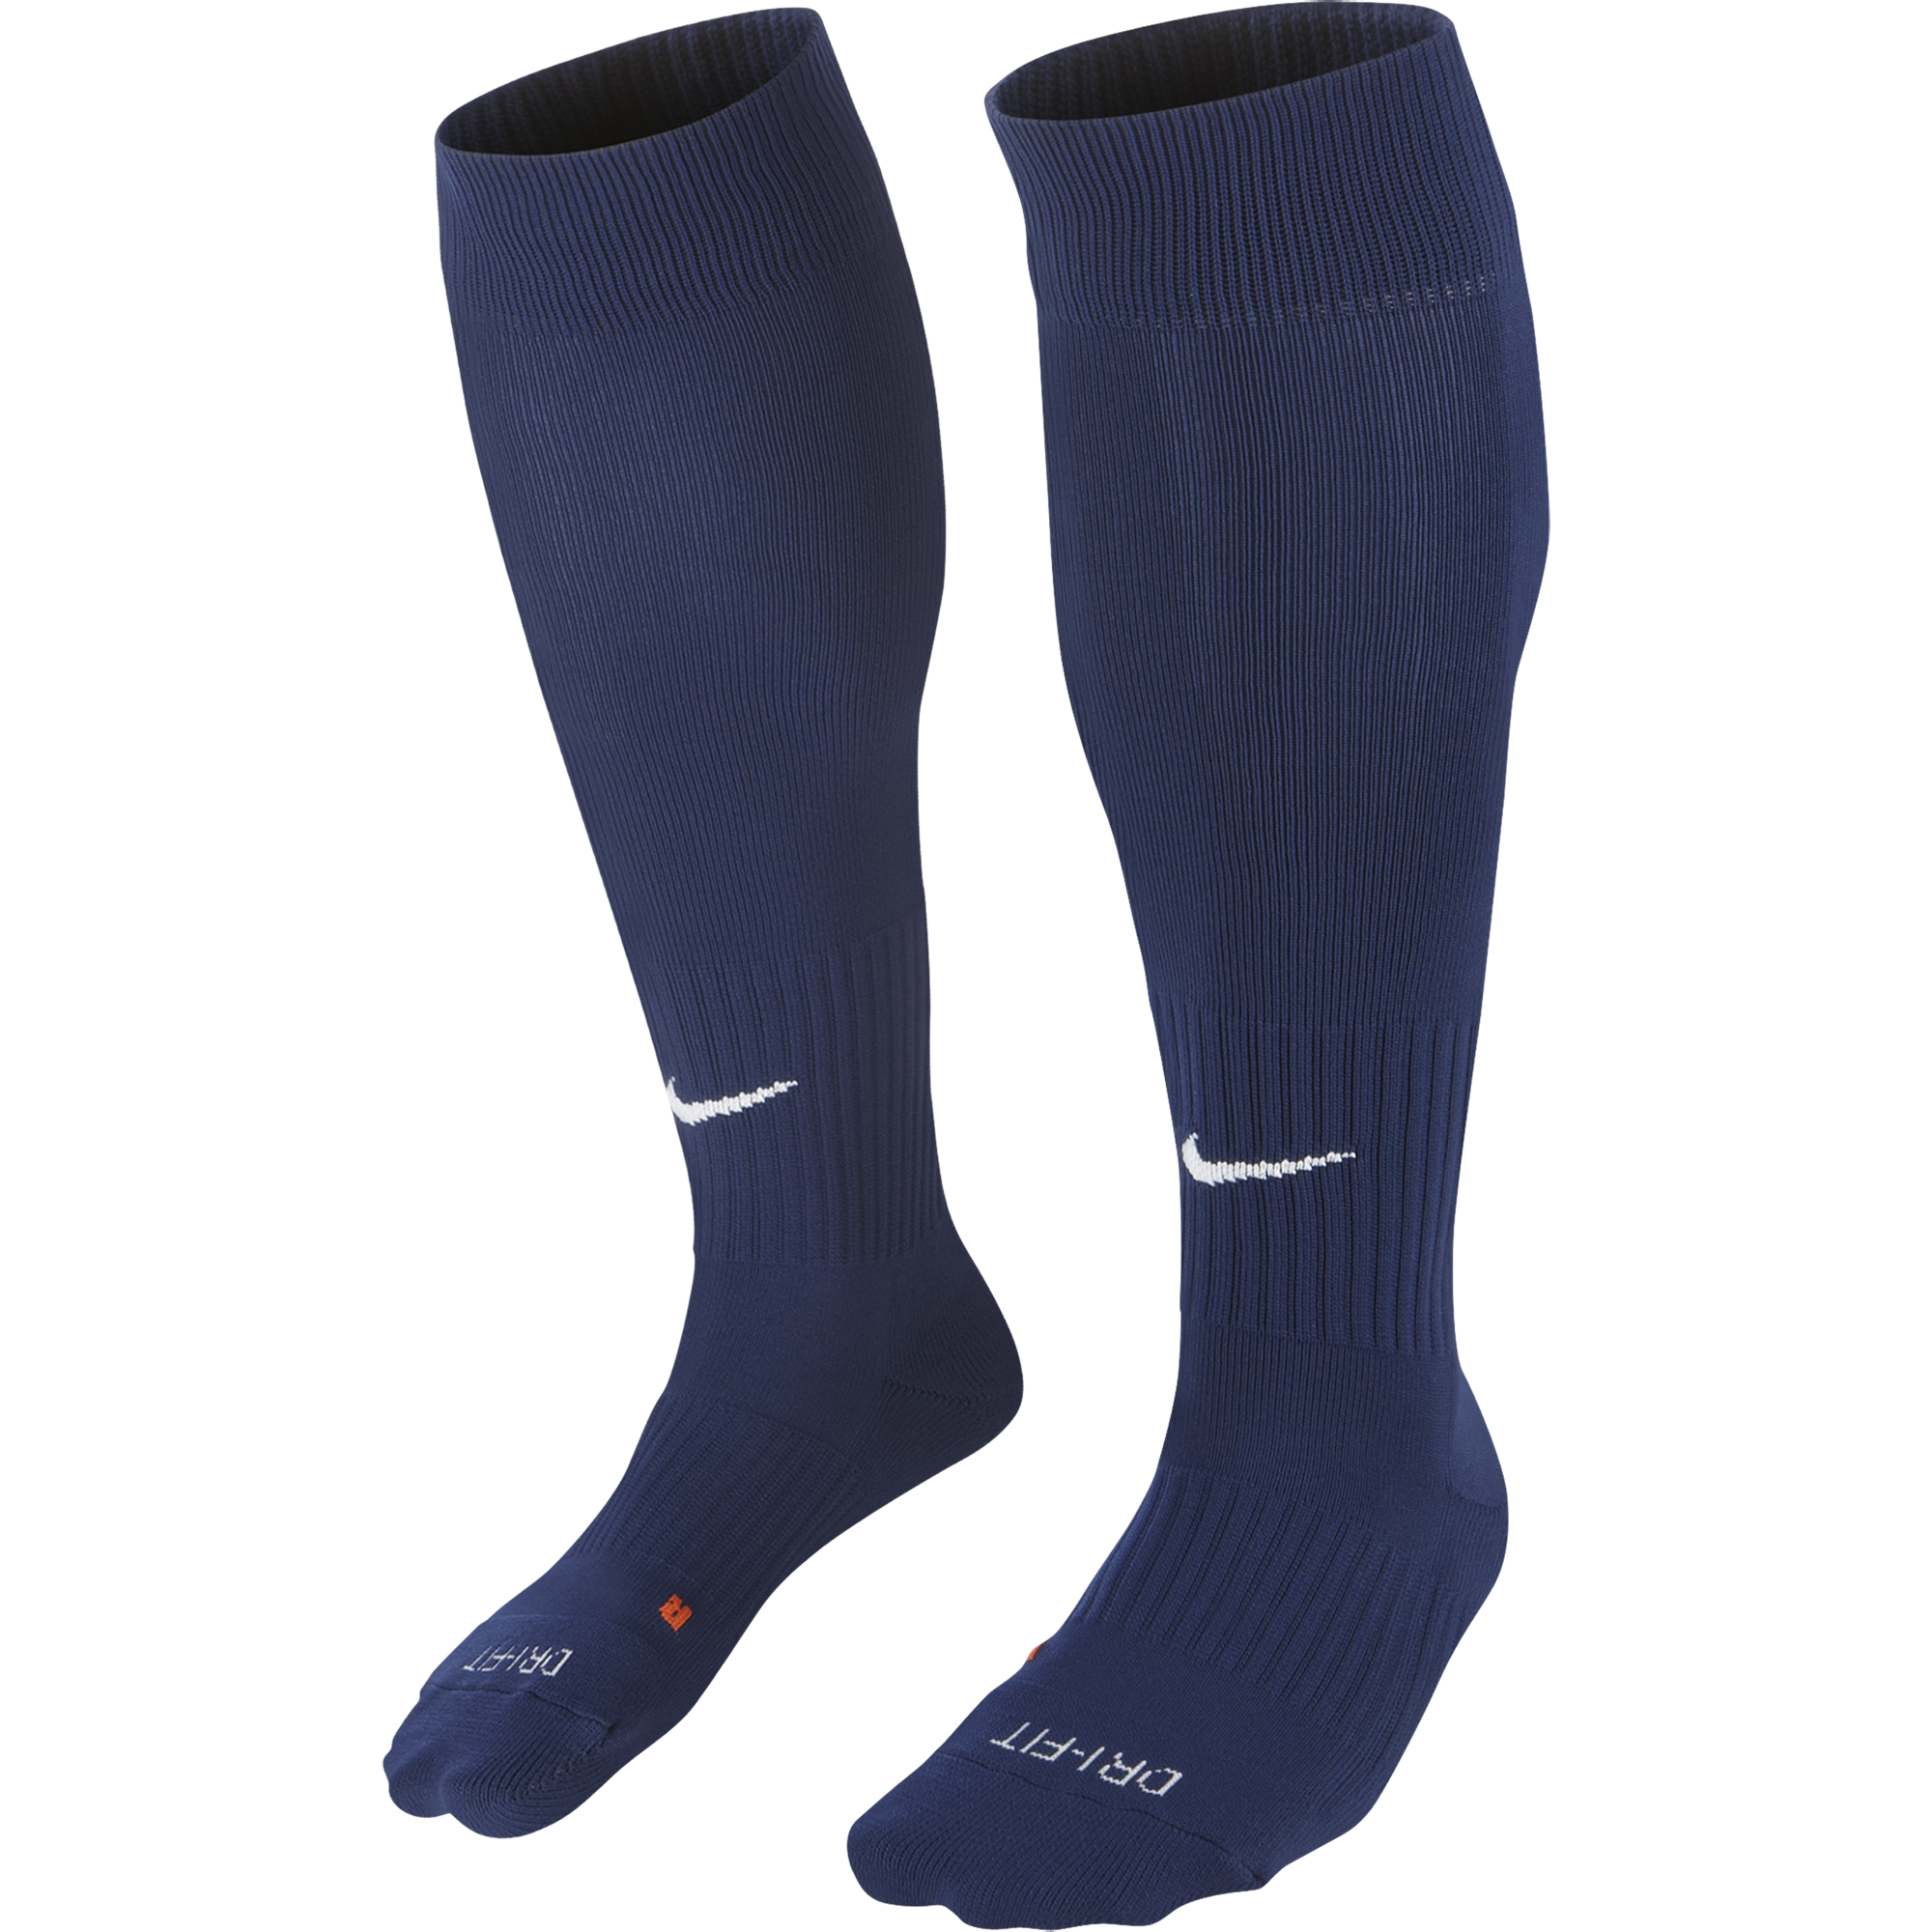 Nike Classic II Socks in Midnight Navy/White